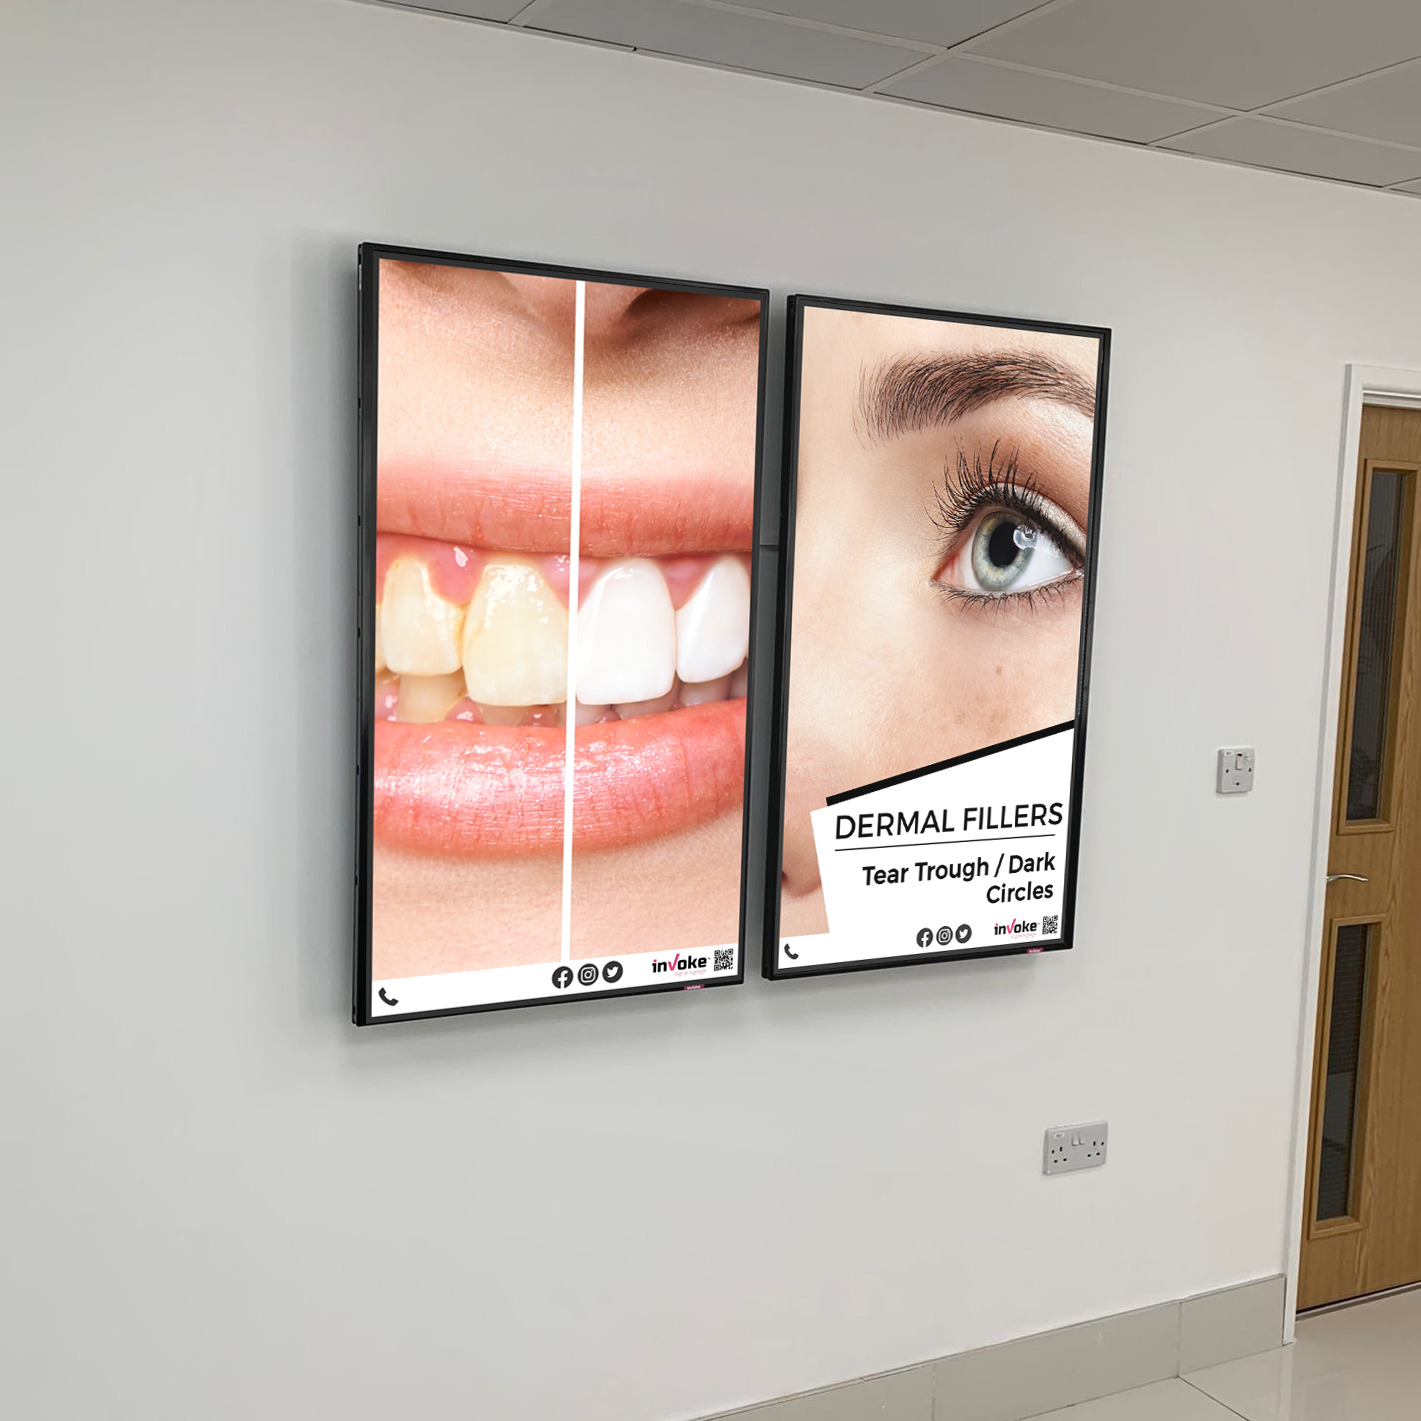 peach dental teeth whitening and dermal filler adverts on internal screens